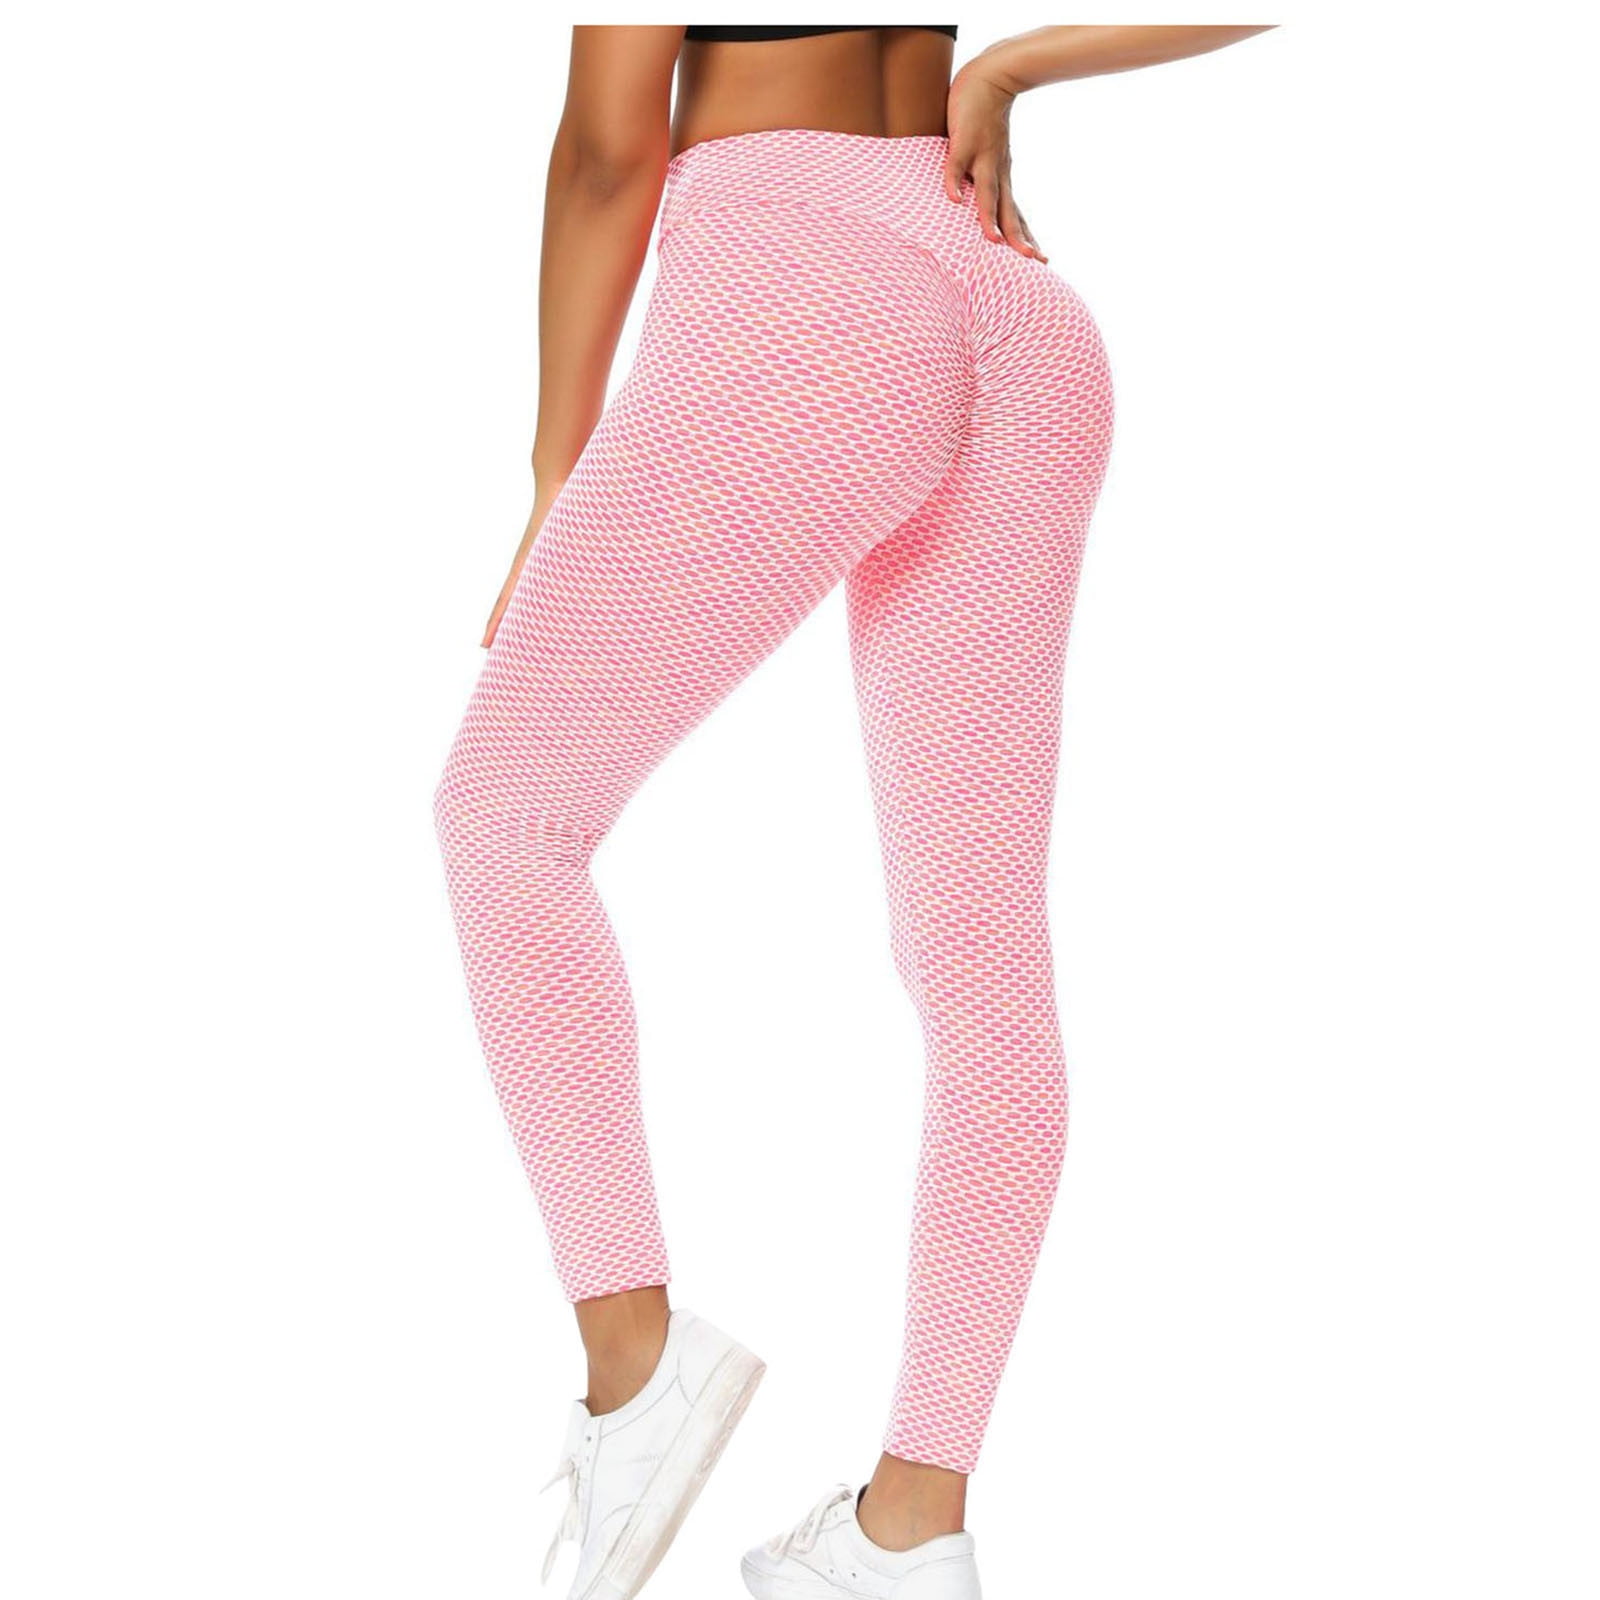 MRULIC yoga pants Length Womens Fitness Stretch Active Running Sports Yoga  Full Leggings Pants Yoga Pants Pink + S 